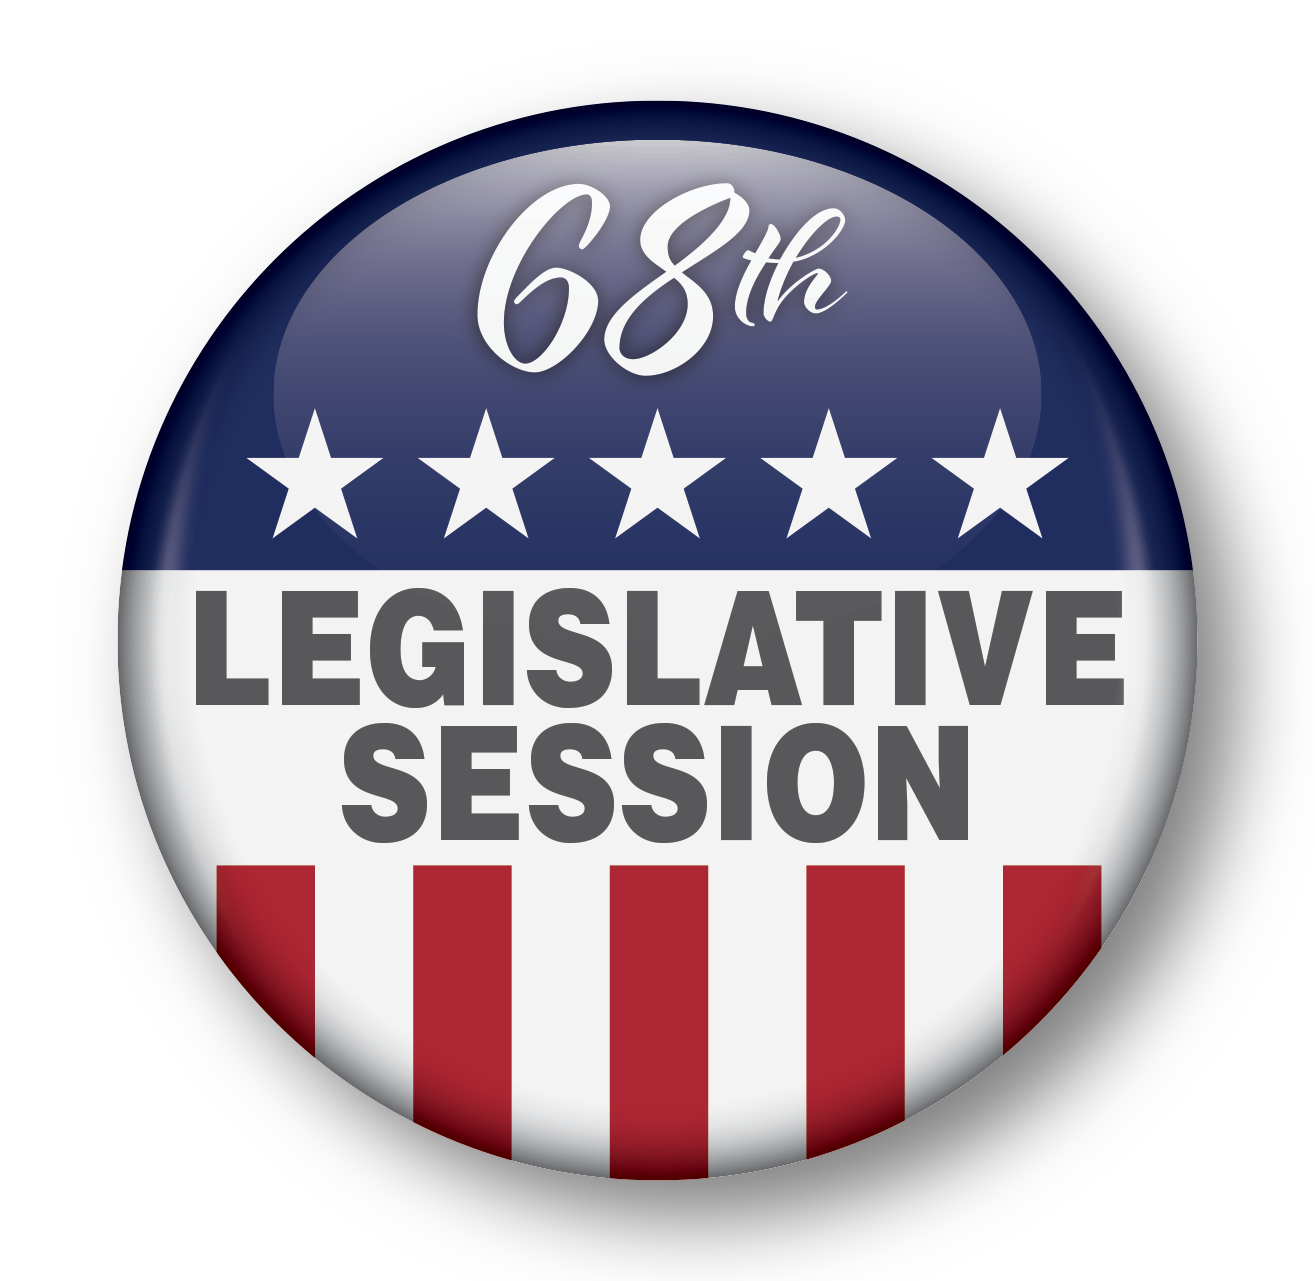 Image for 68th Legislative Session: Week One